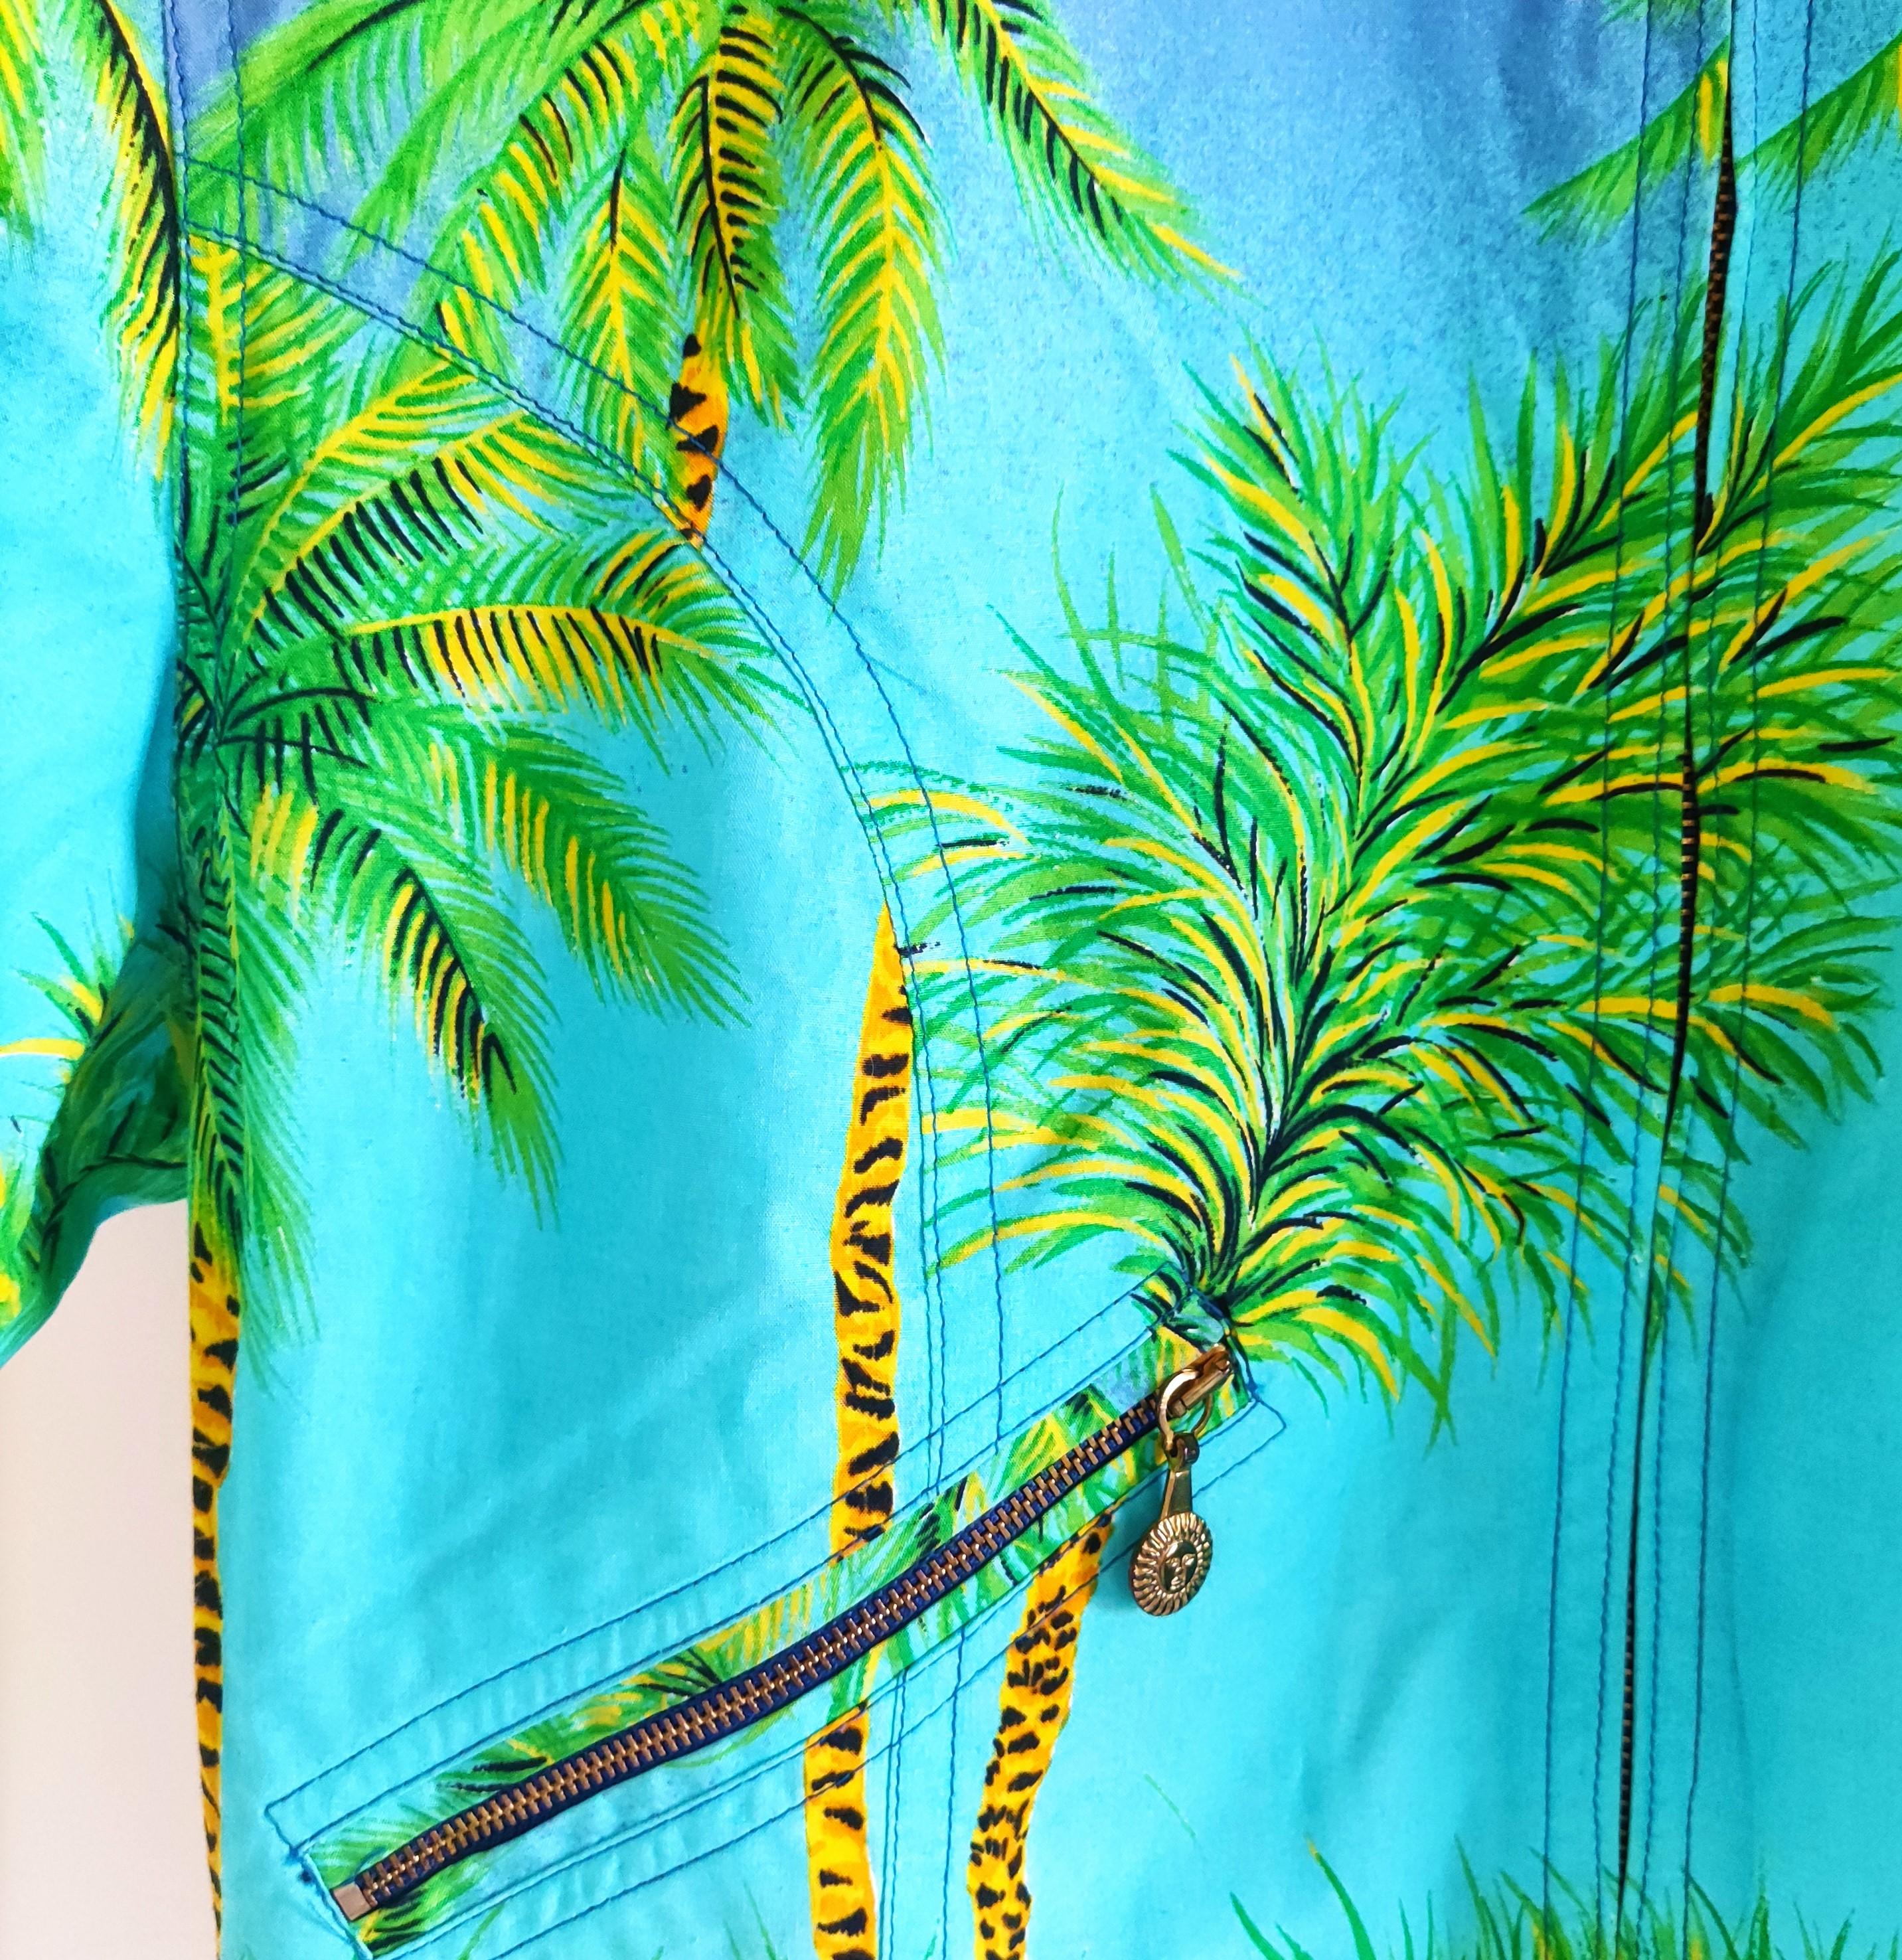 Blue Gianni Versace Sport Miami Palm Tree Jeans Couture Blazer Jacket Suit Dress